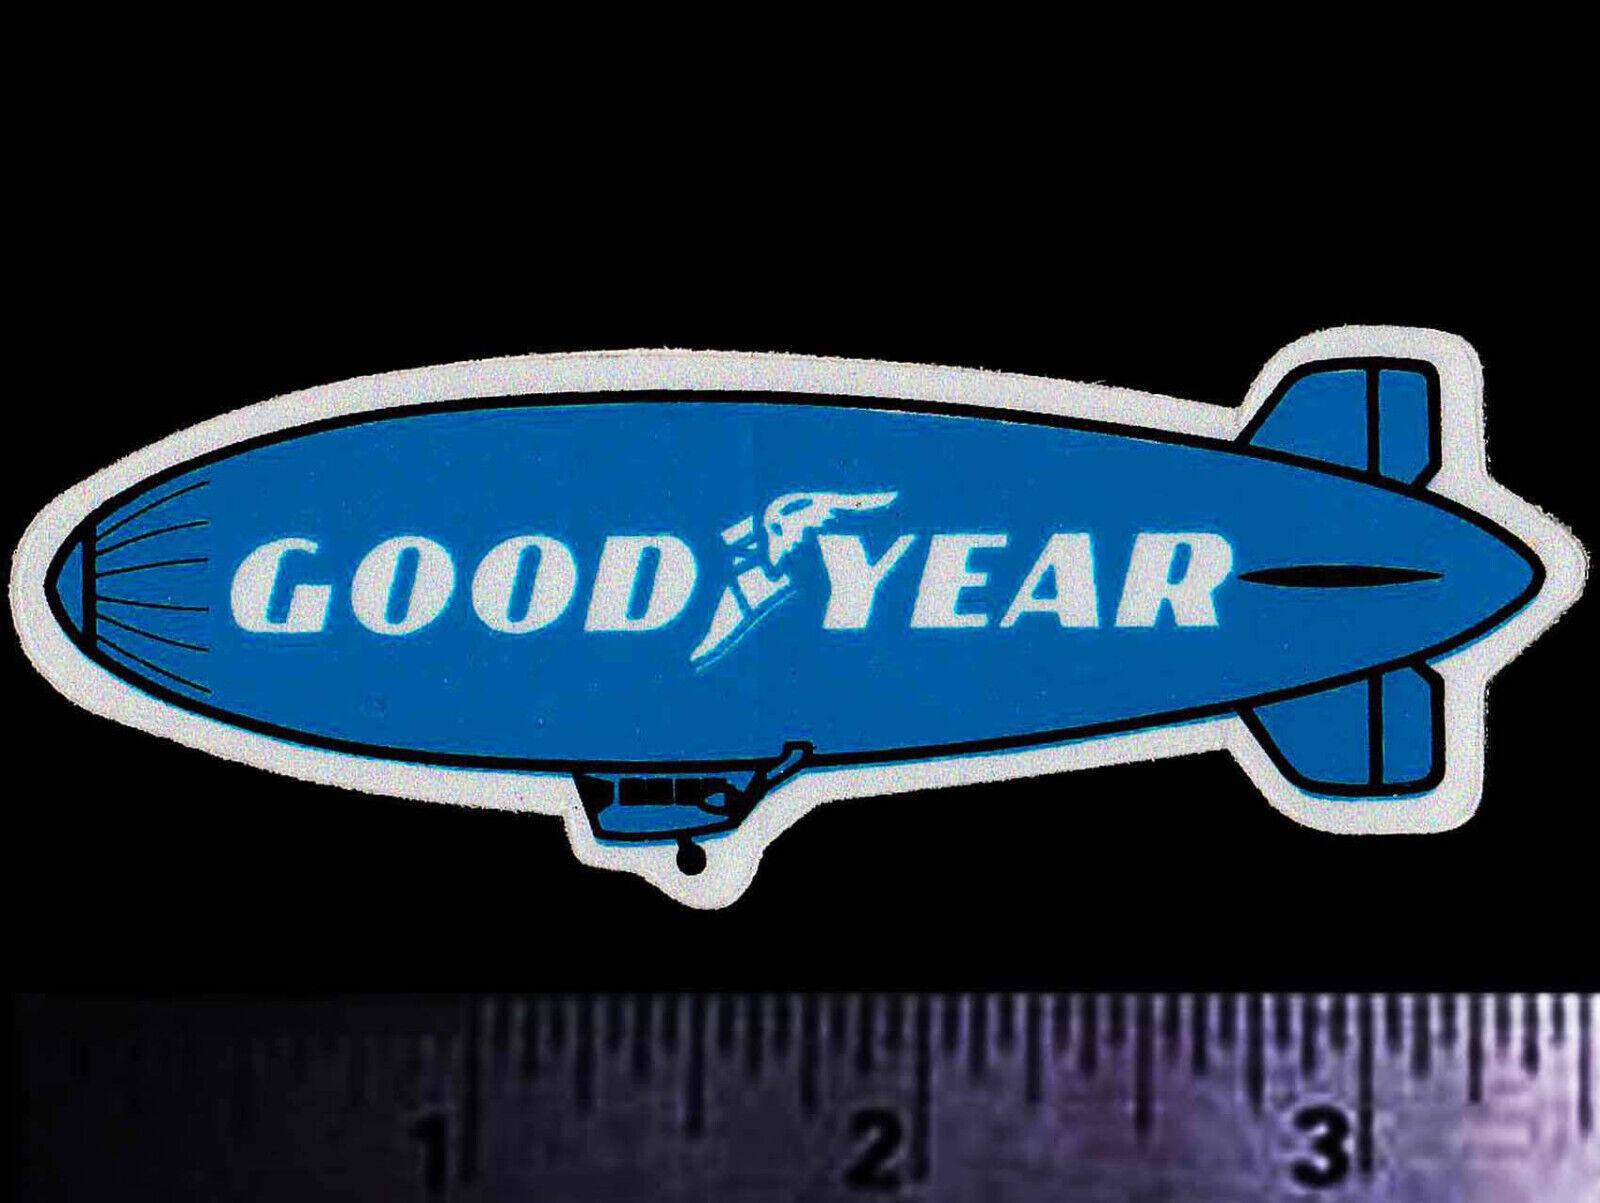 GOOD YEAR Blimp - Original Vintage 1970's Racing Decal/Sticker - 3.50 inch